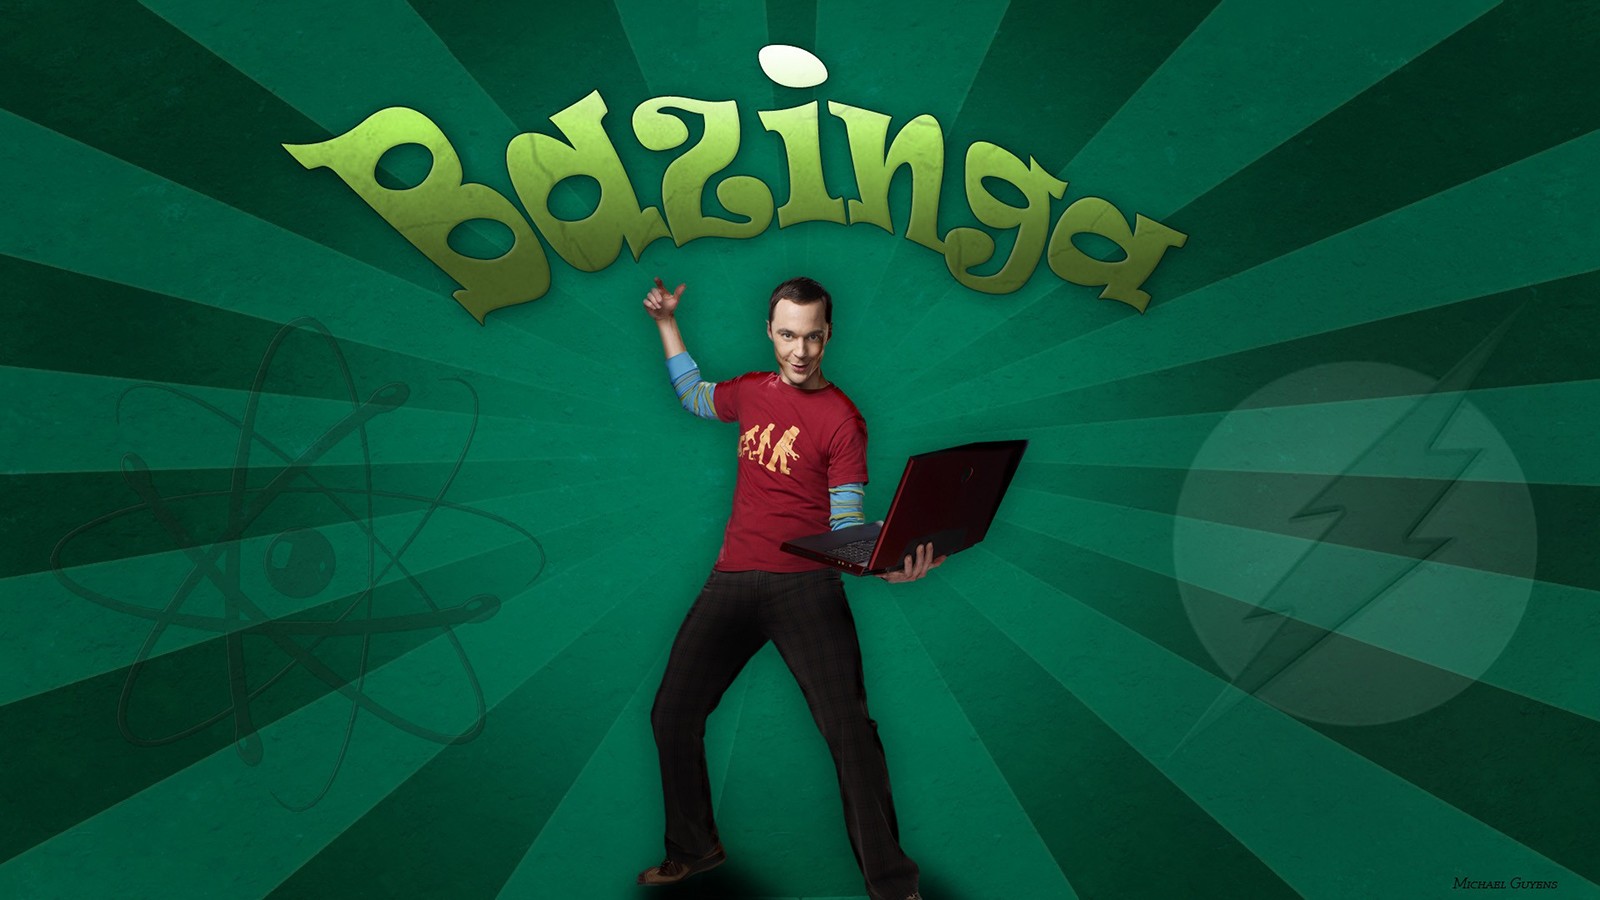 General 1600x900 The Big Bang Theory Sheldon Cooper men green background green HUMOR TV series laptop